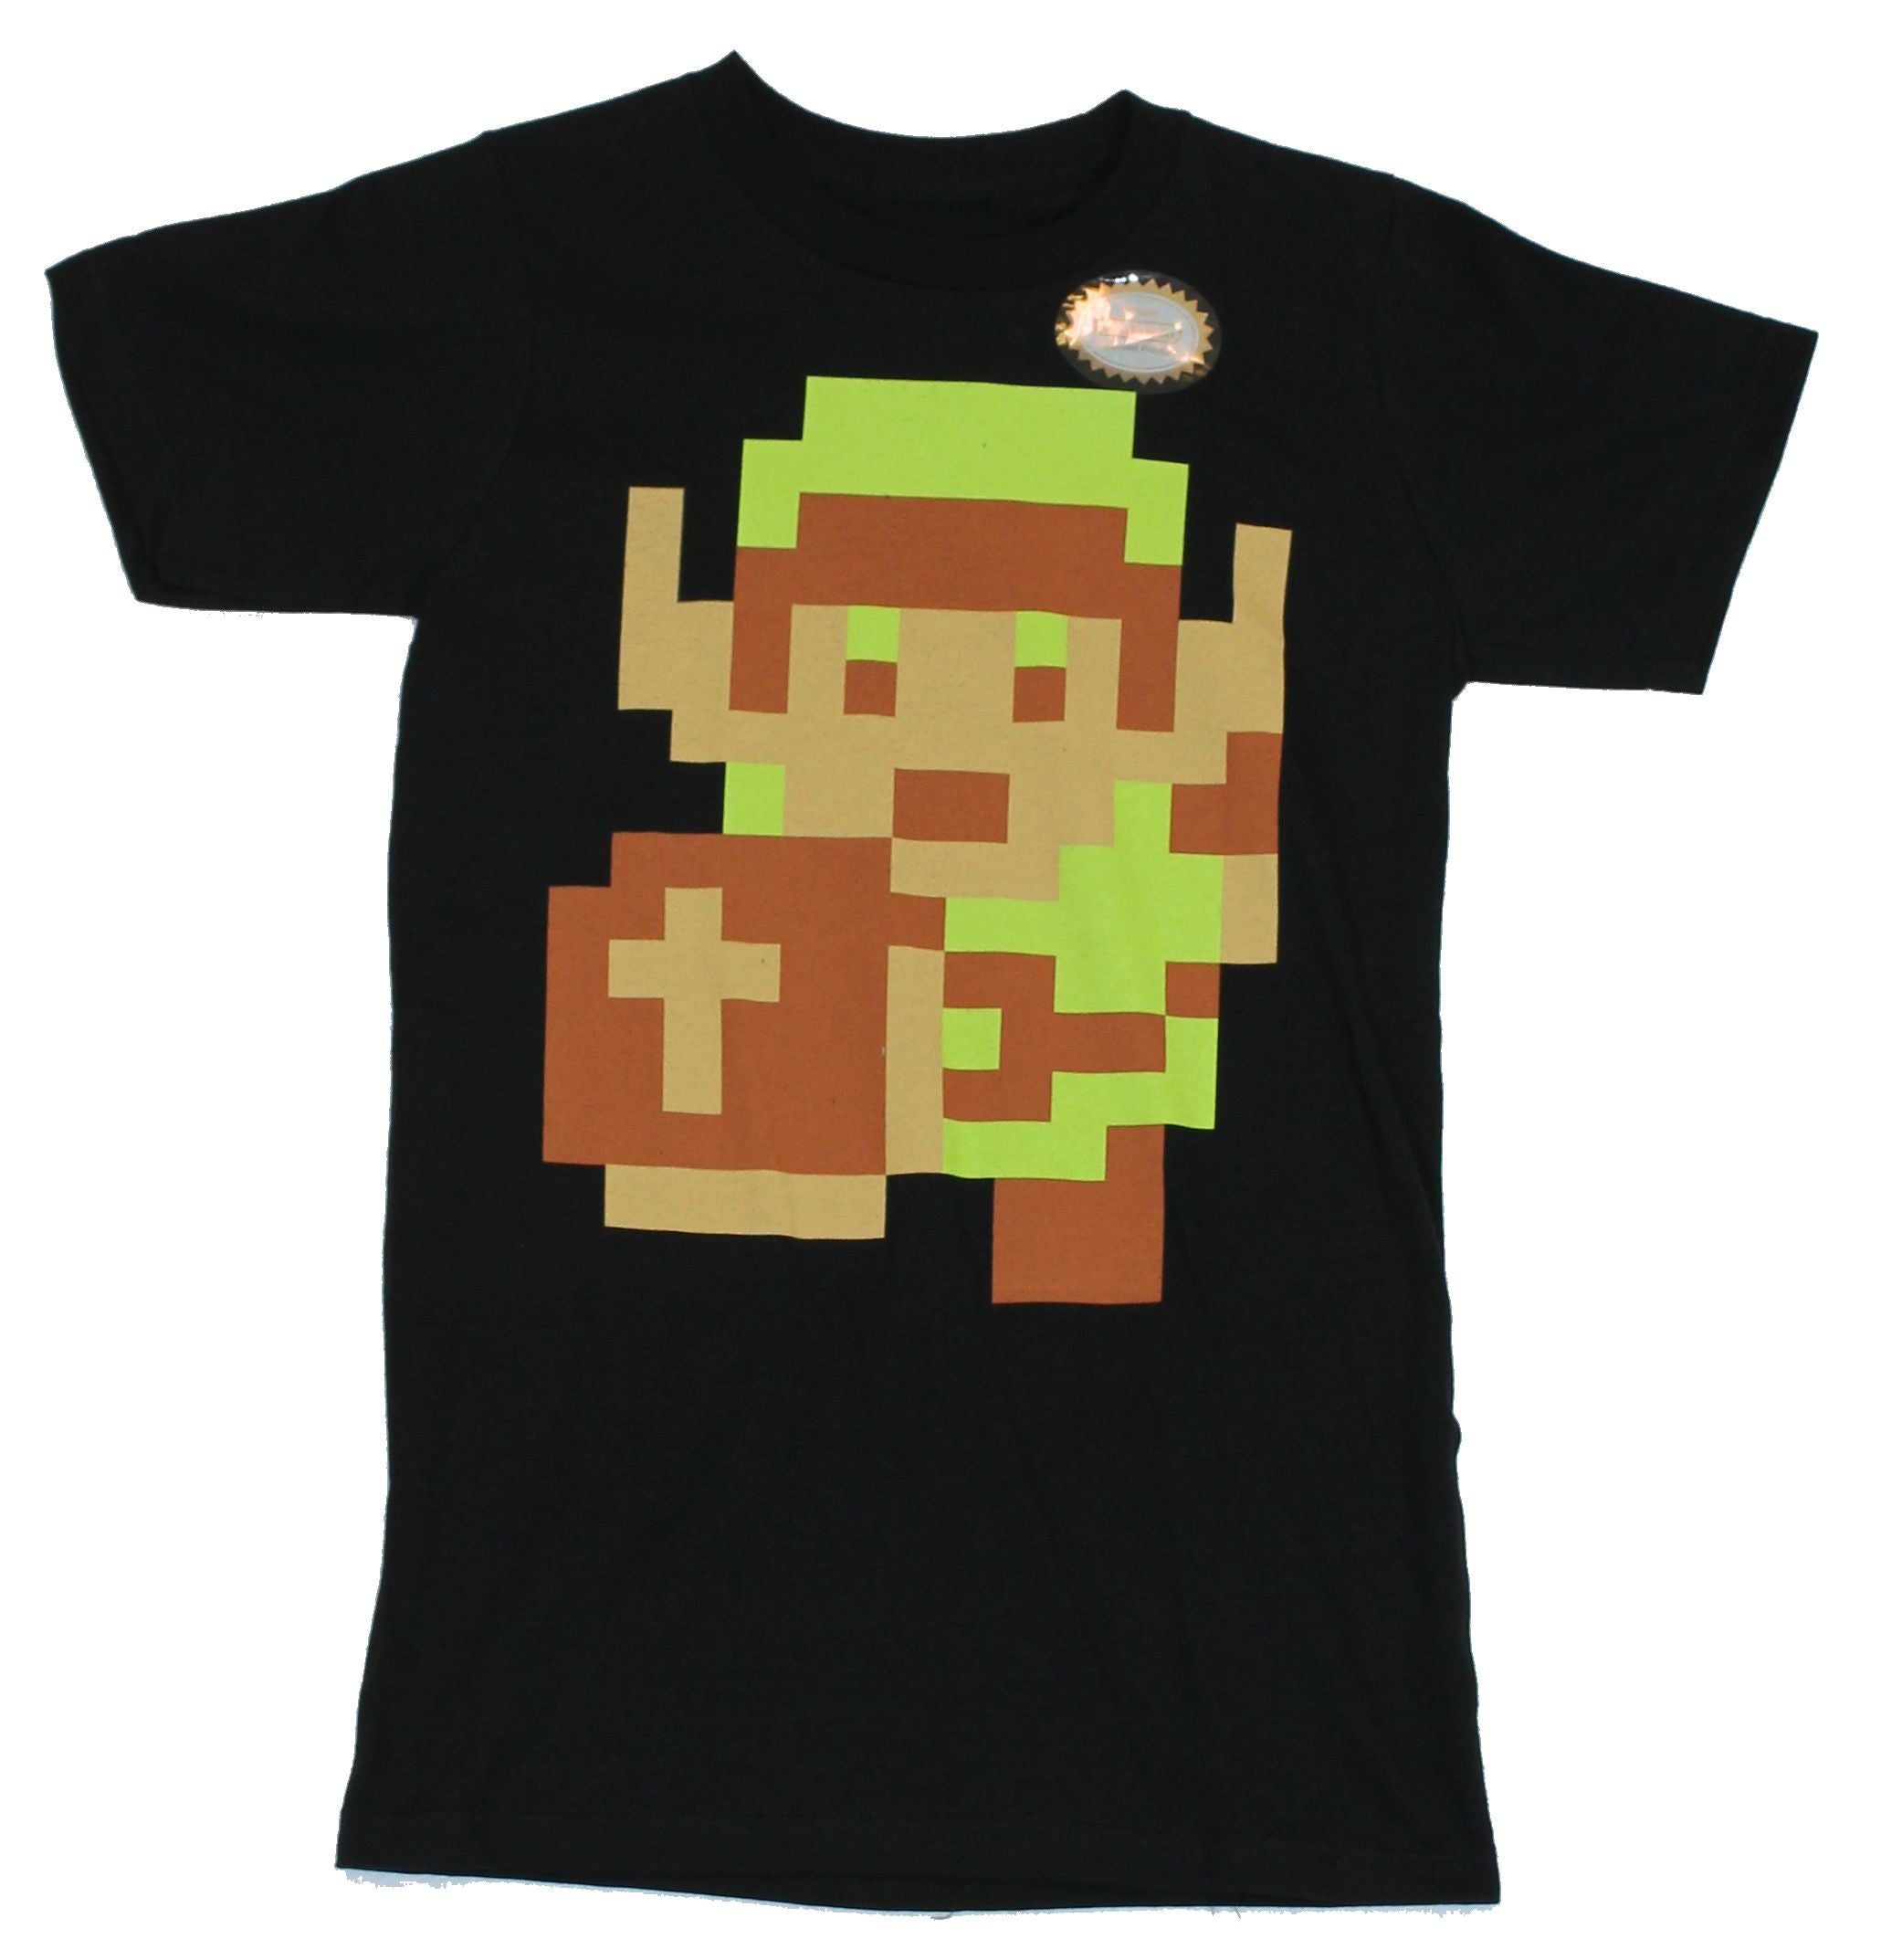 Legend of Zelda Mens T-Shirt - Classic 8-Bit Approaching Link Image